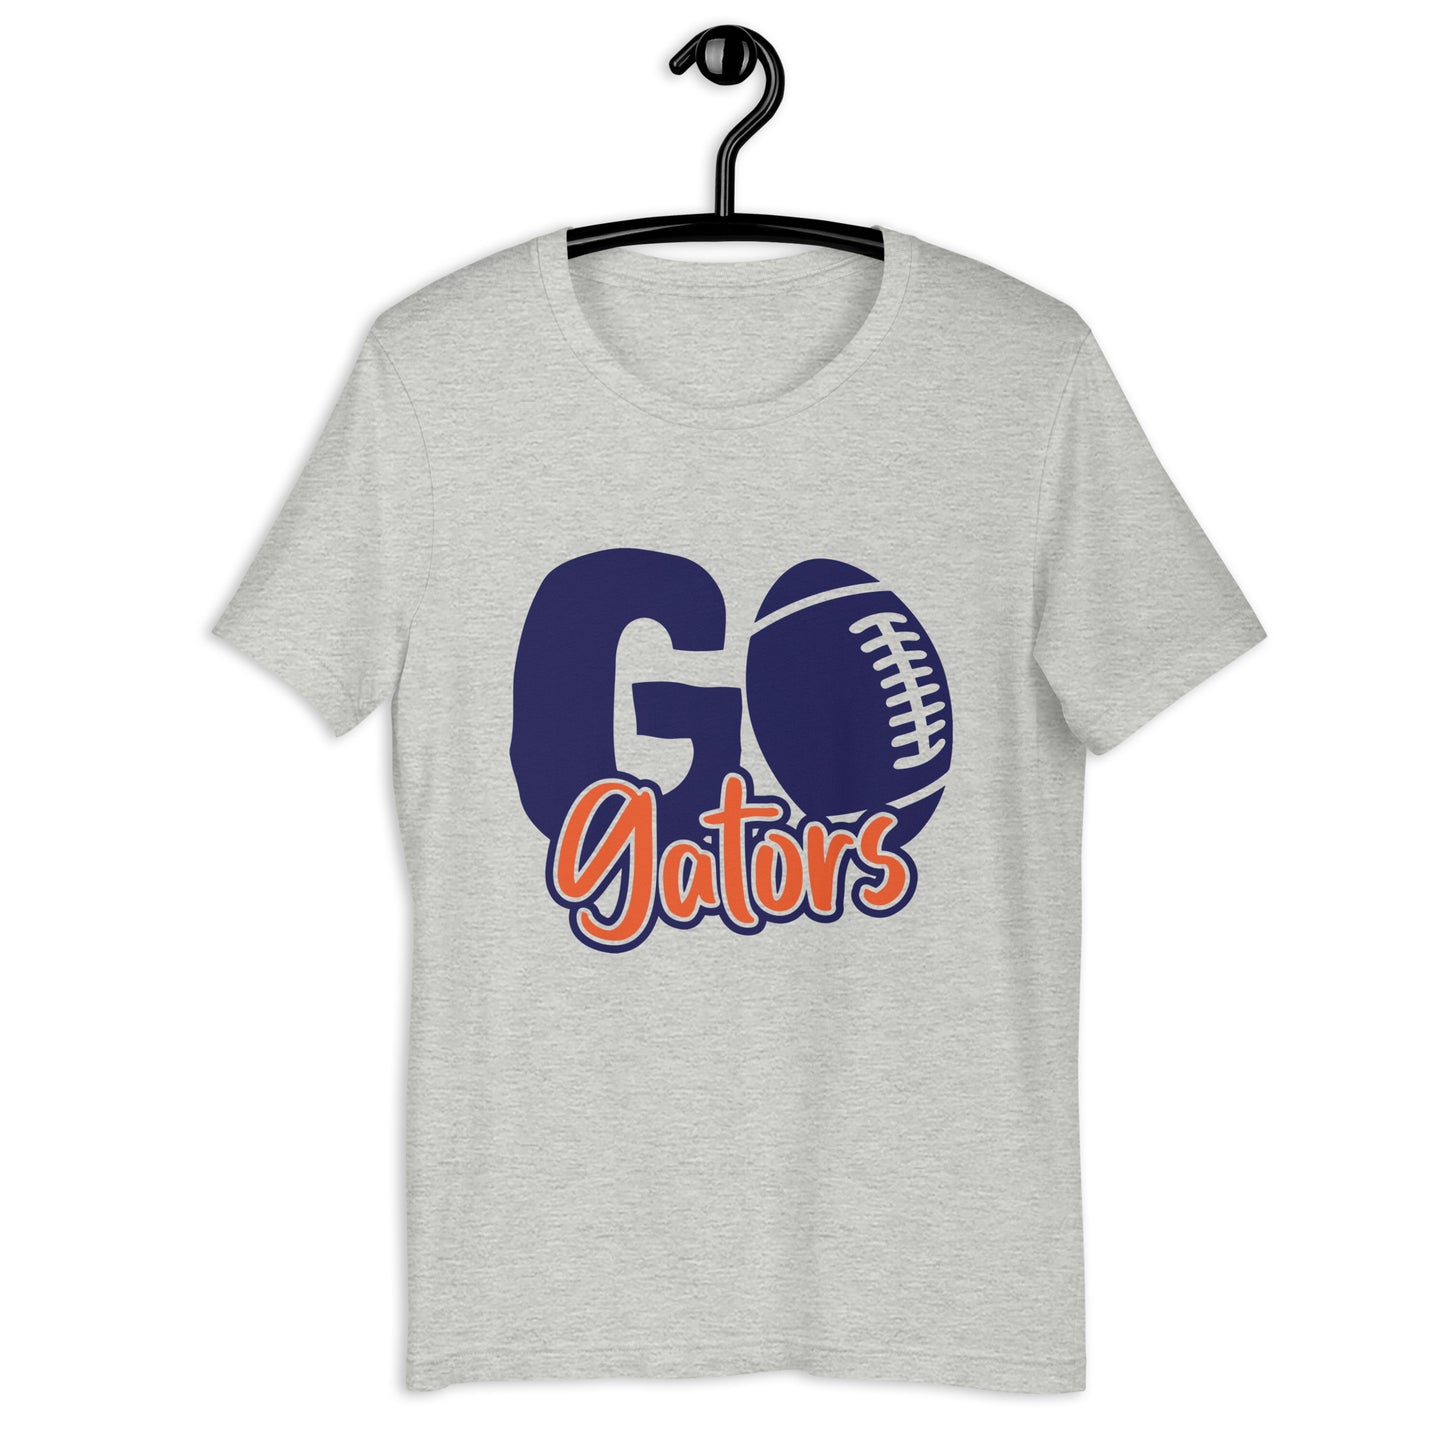 Go Gators t-shirt